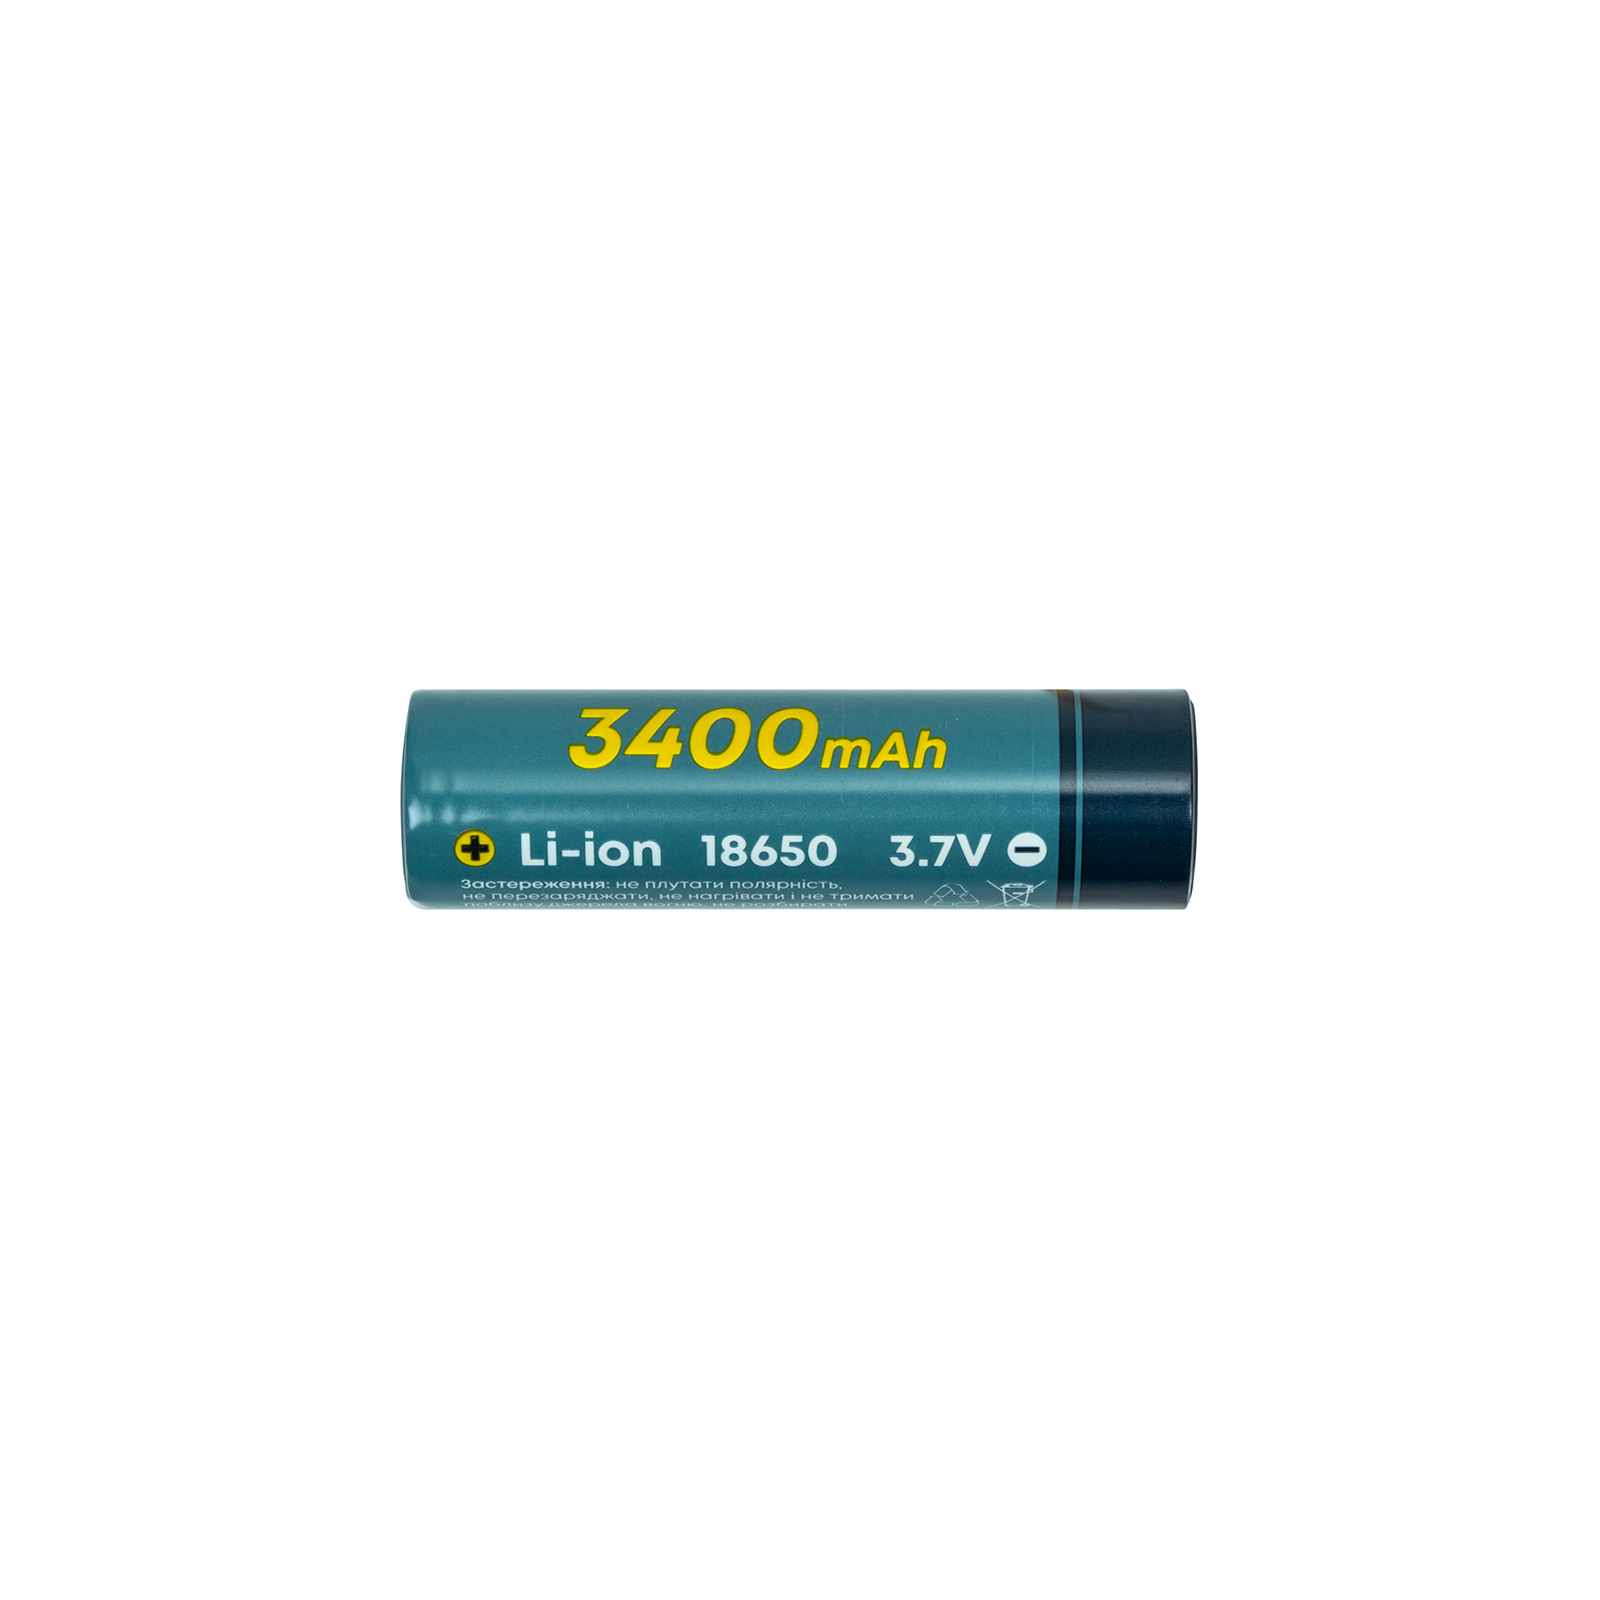 Акумулятор 18650 Li-Ion 3400 mAh 3.7V 1C PowerPlant (AA620234)